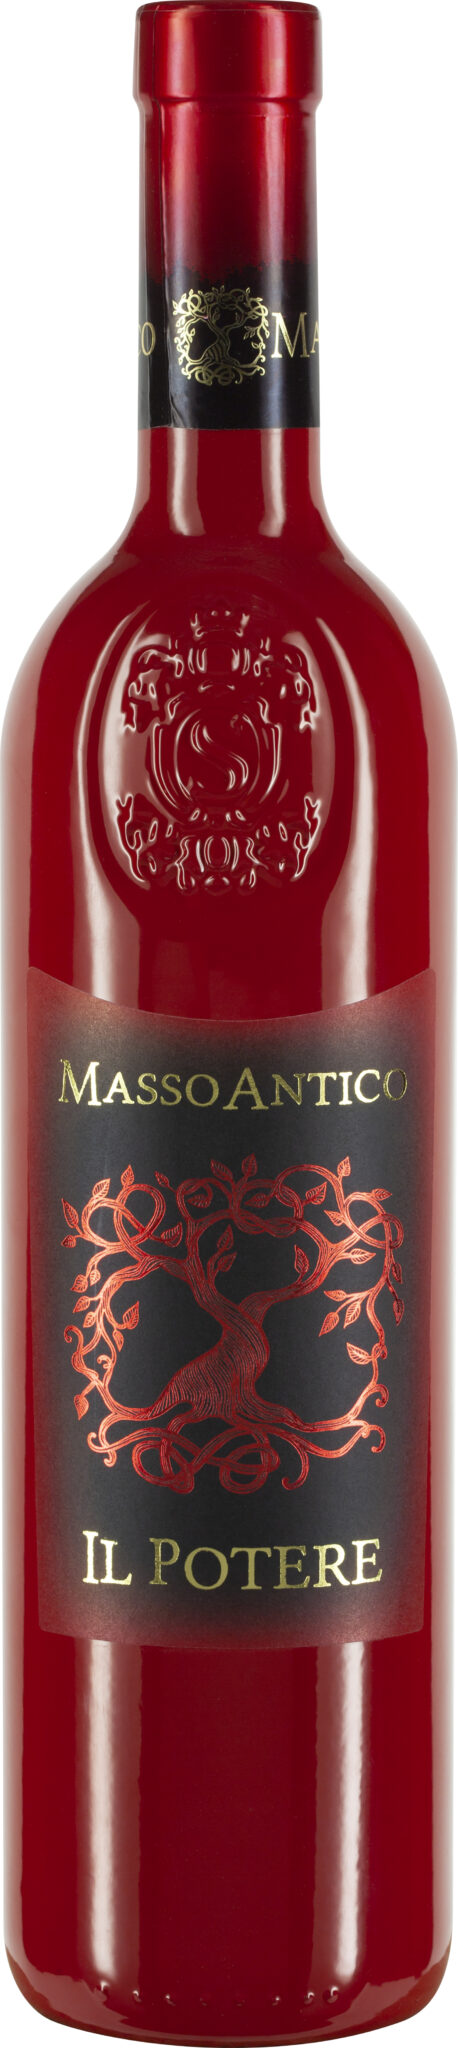 Masso Antico Il Potere Rosso Puglia IGT | der-schmeckt-mir